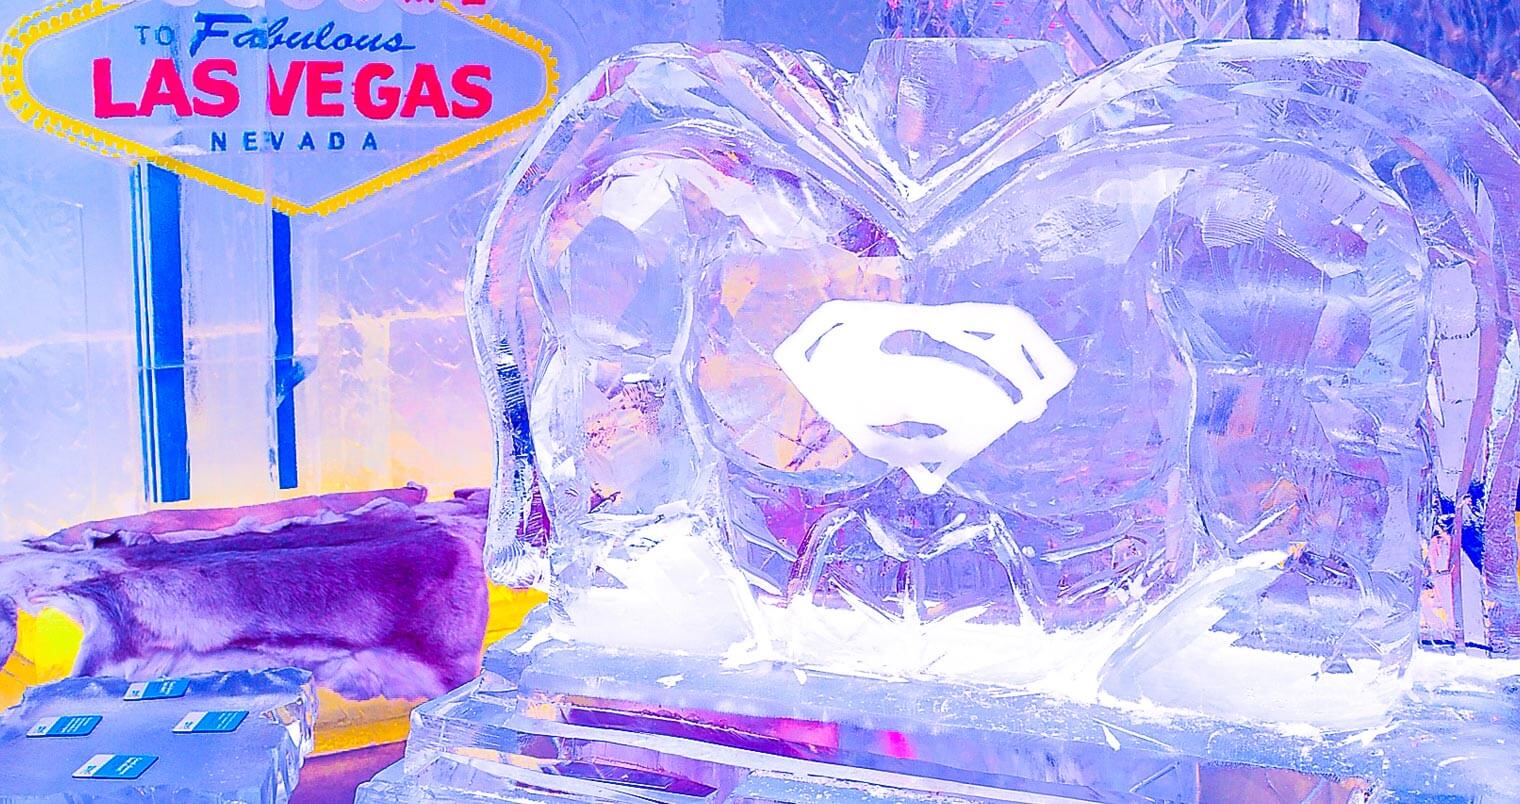 Minus5 Ice Bar at Monte Carlo Las Vegas Debuts Batman vs. Superman Sculptures, industry news, featured image